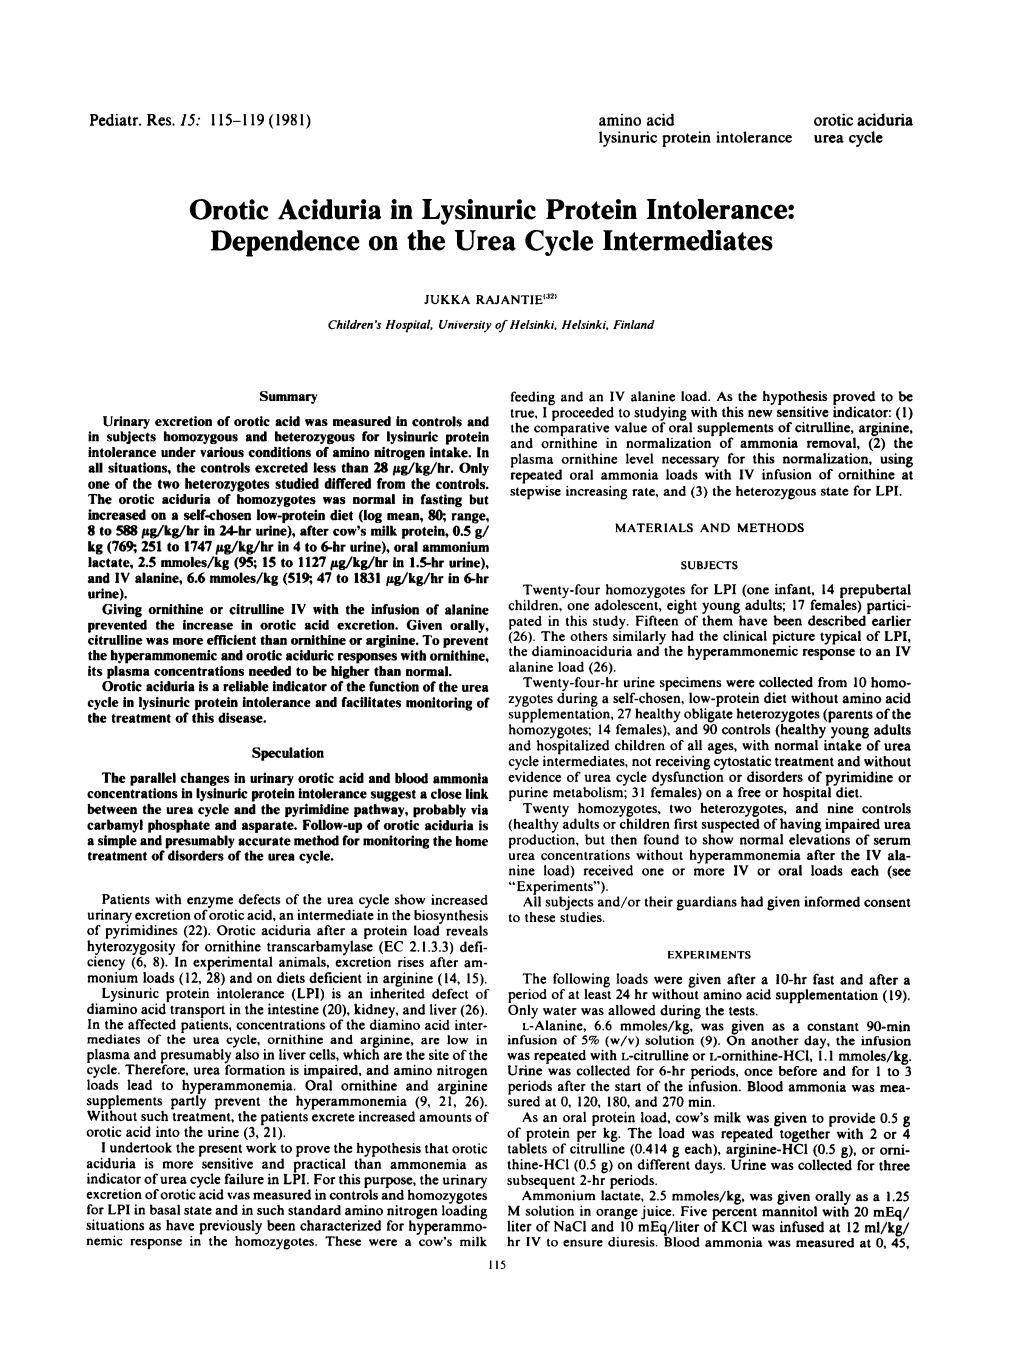 Orotic Aciduria in Lysinuric Protein Intolerance: Dependence on the Urea Cycle Intermediates